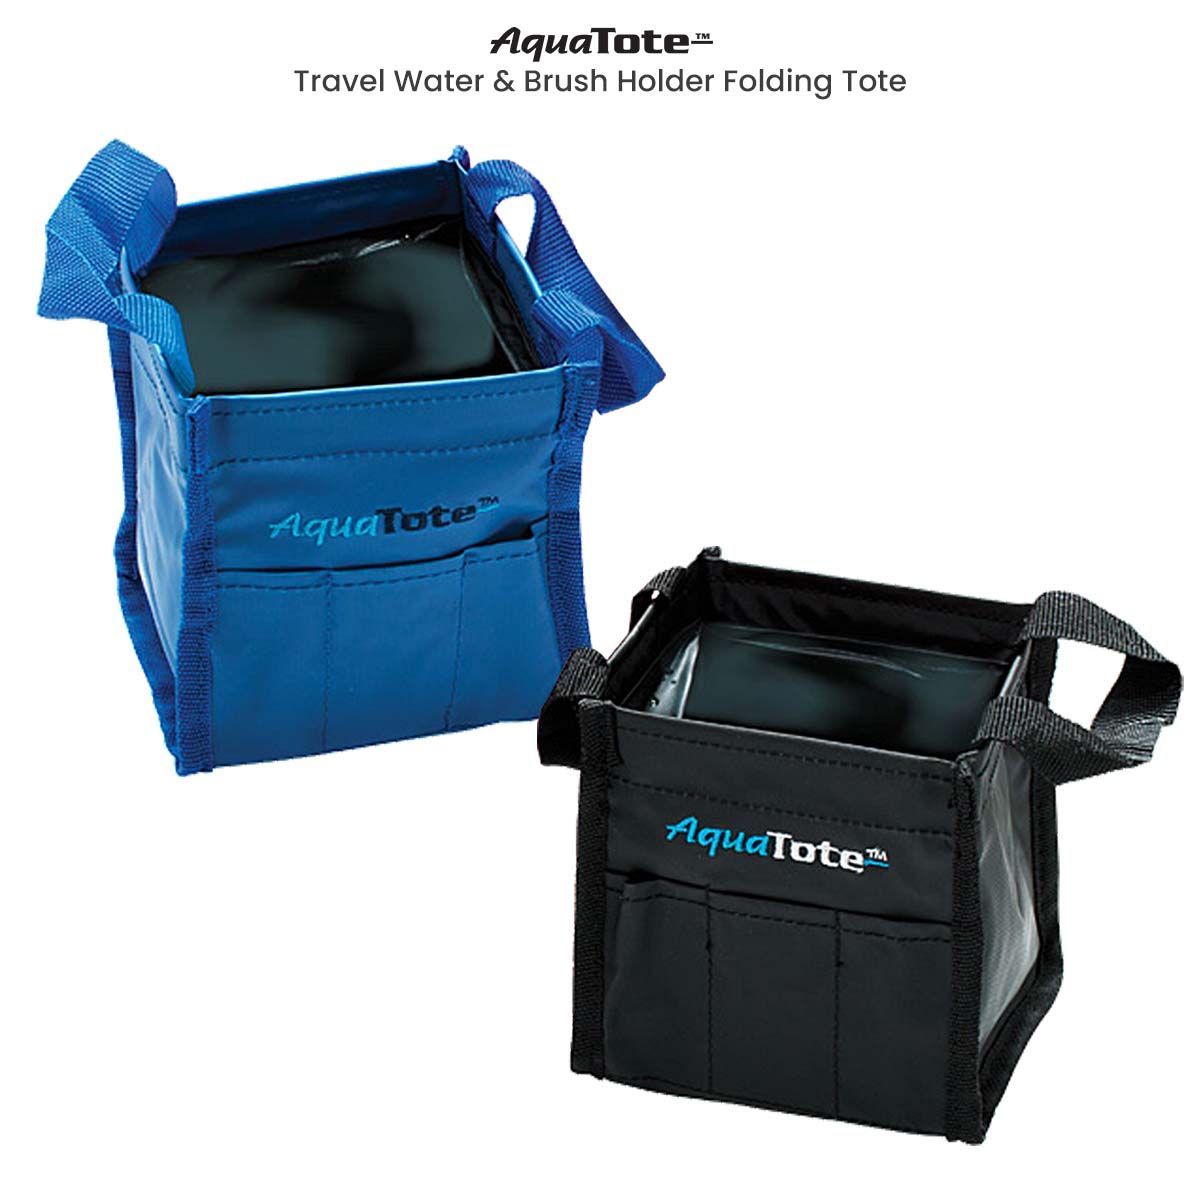 Foldable Tote Bag - Lightweight Nylon - Take Anywhere